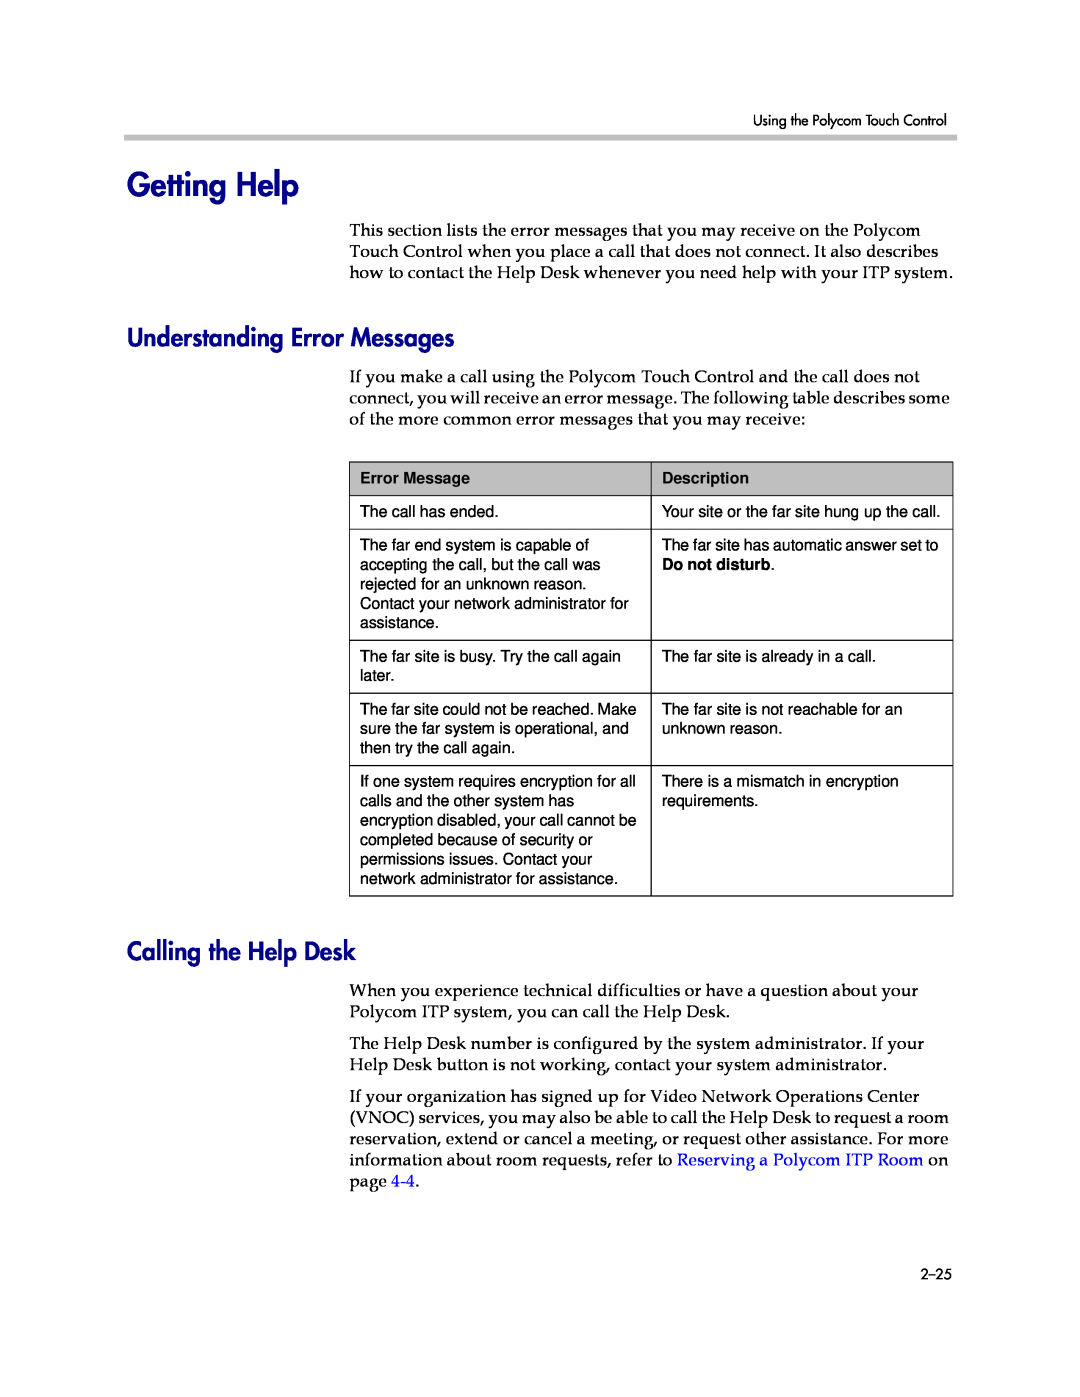 Polycom 3725-63211-002, A manual Getting Help, Understanding Error Messages, Calling the Help Desk 